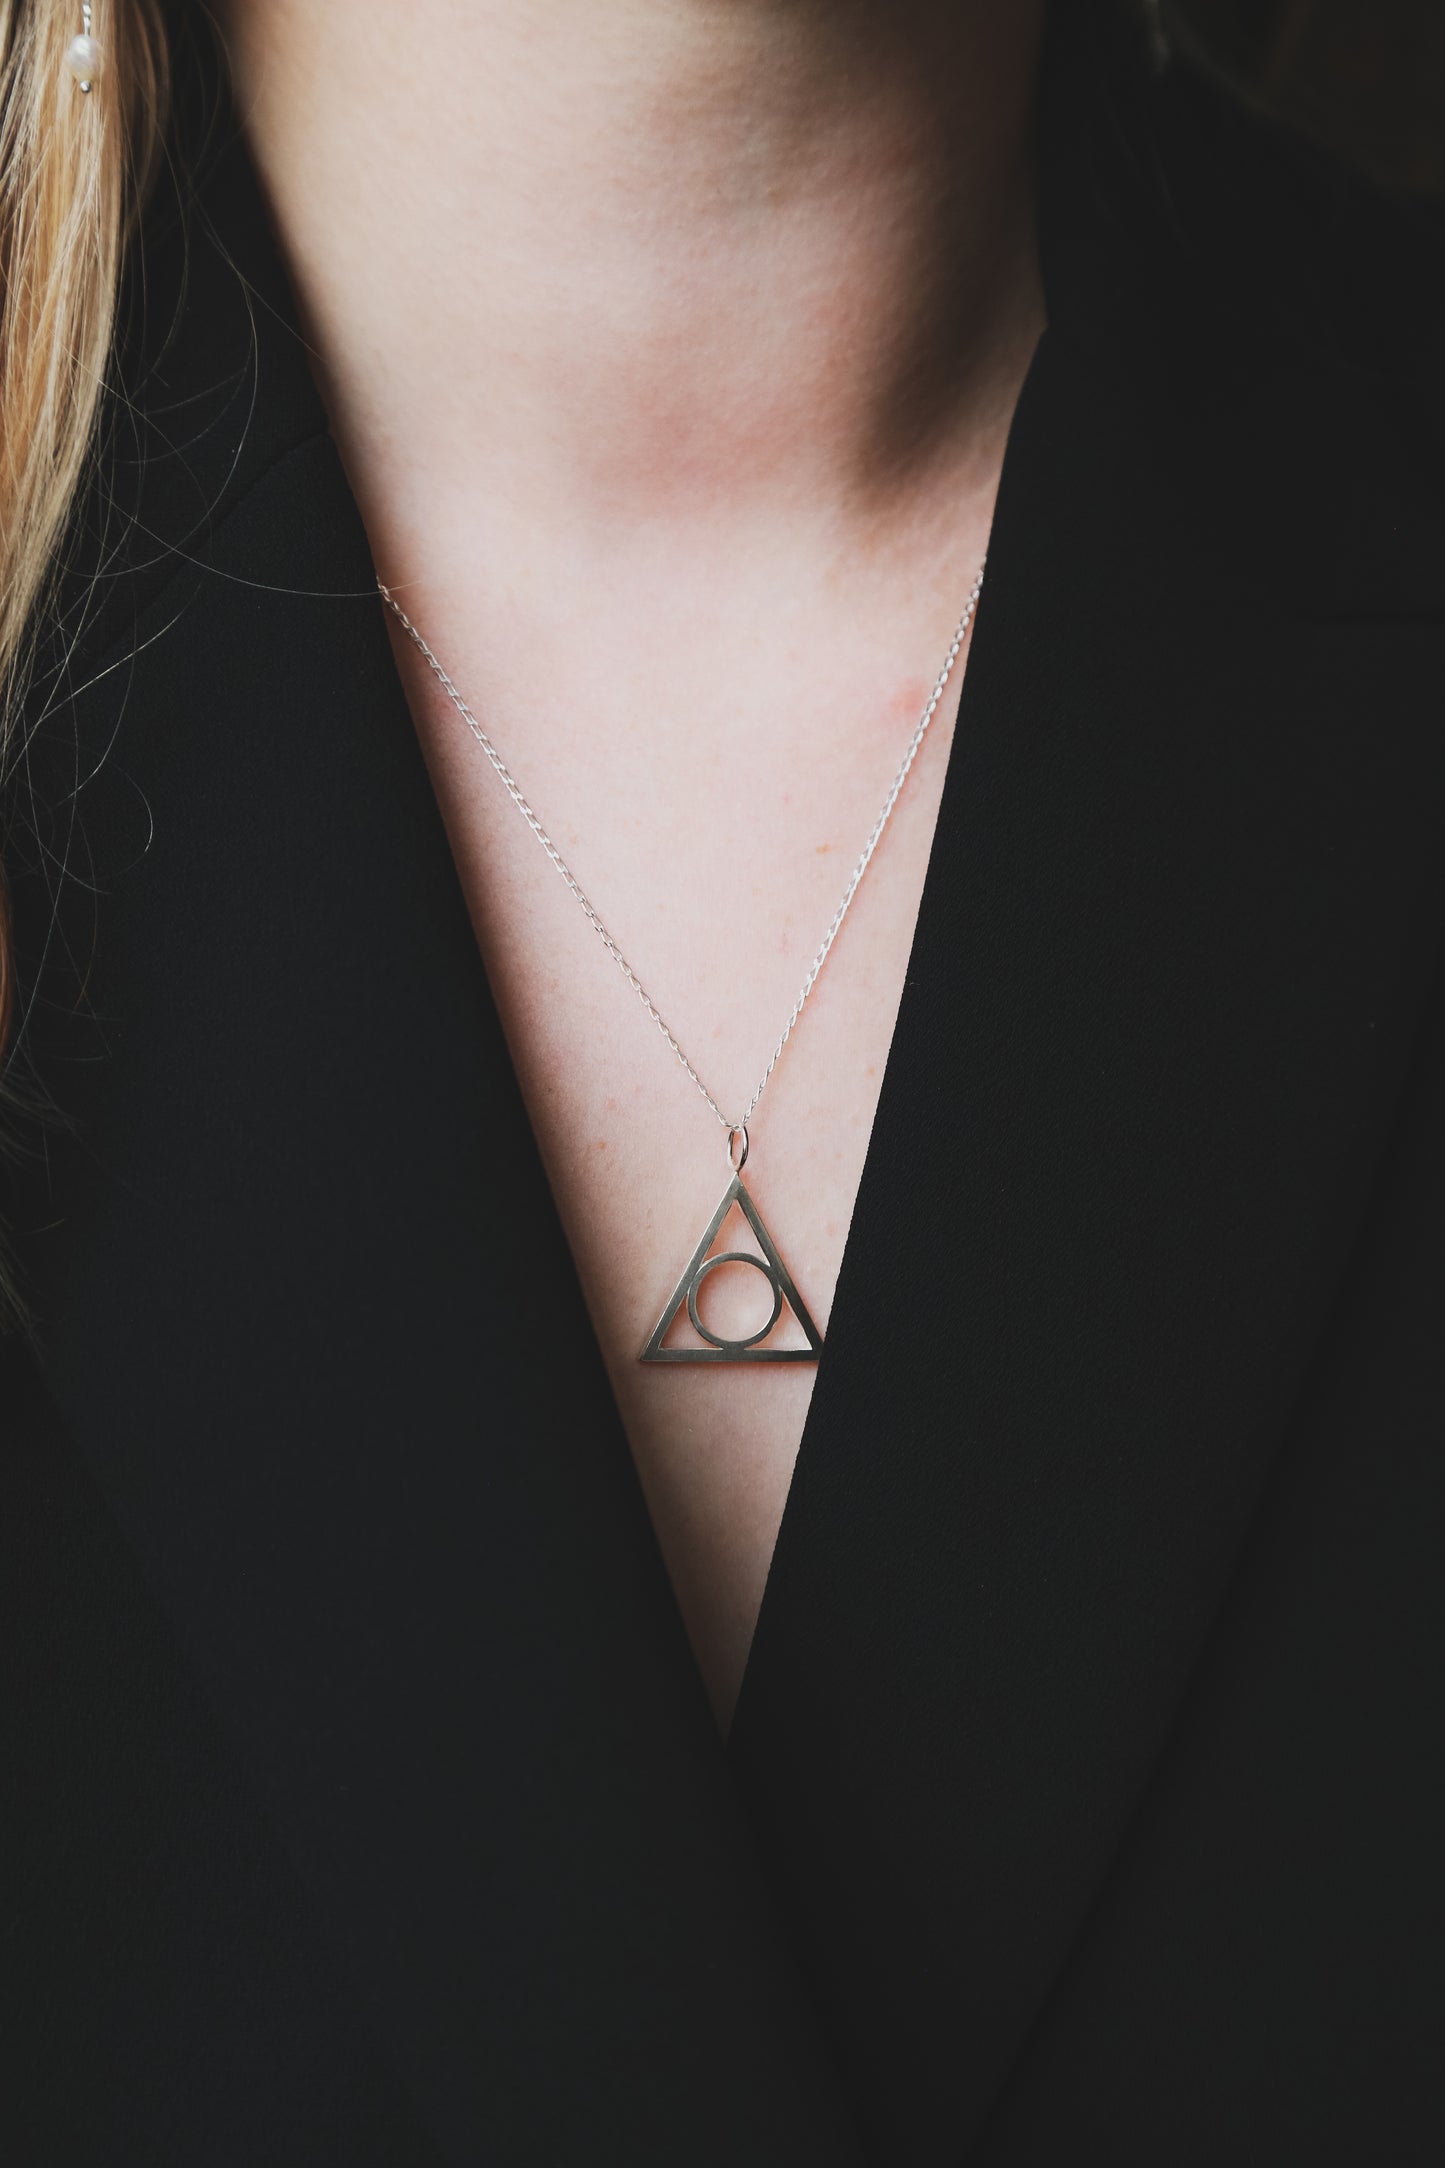 Silver Triangular Pendant. Photo credit Iona Hall.